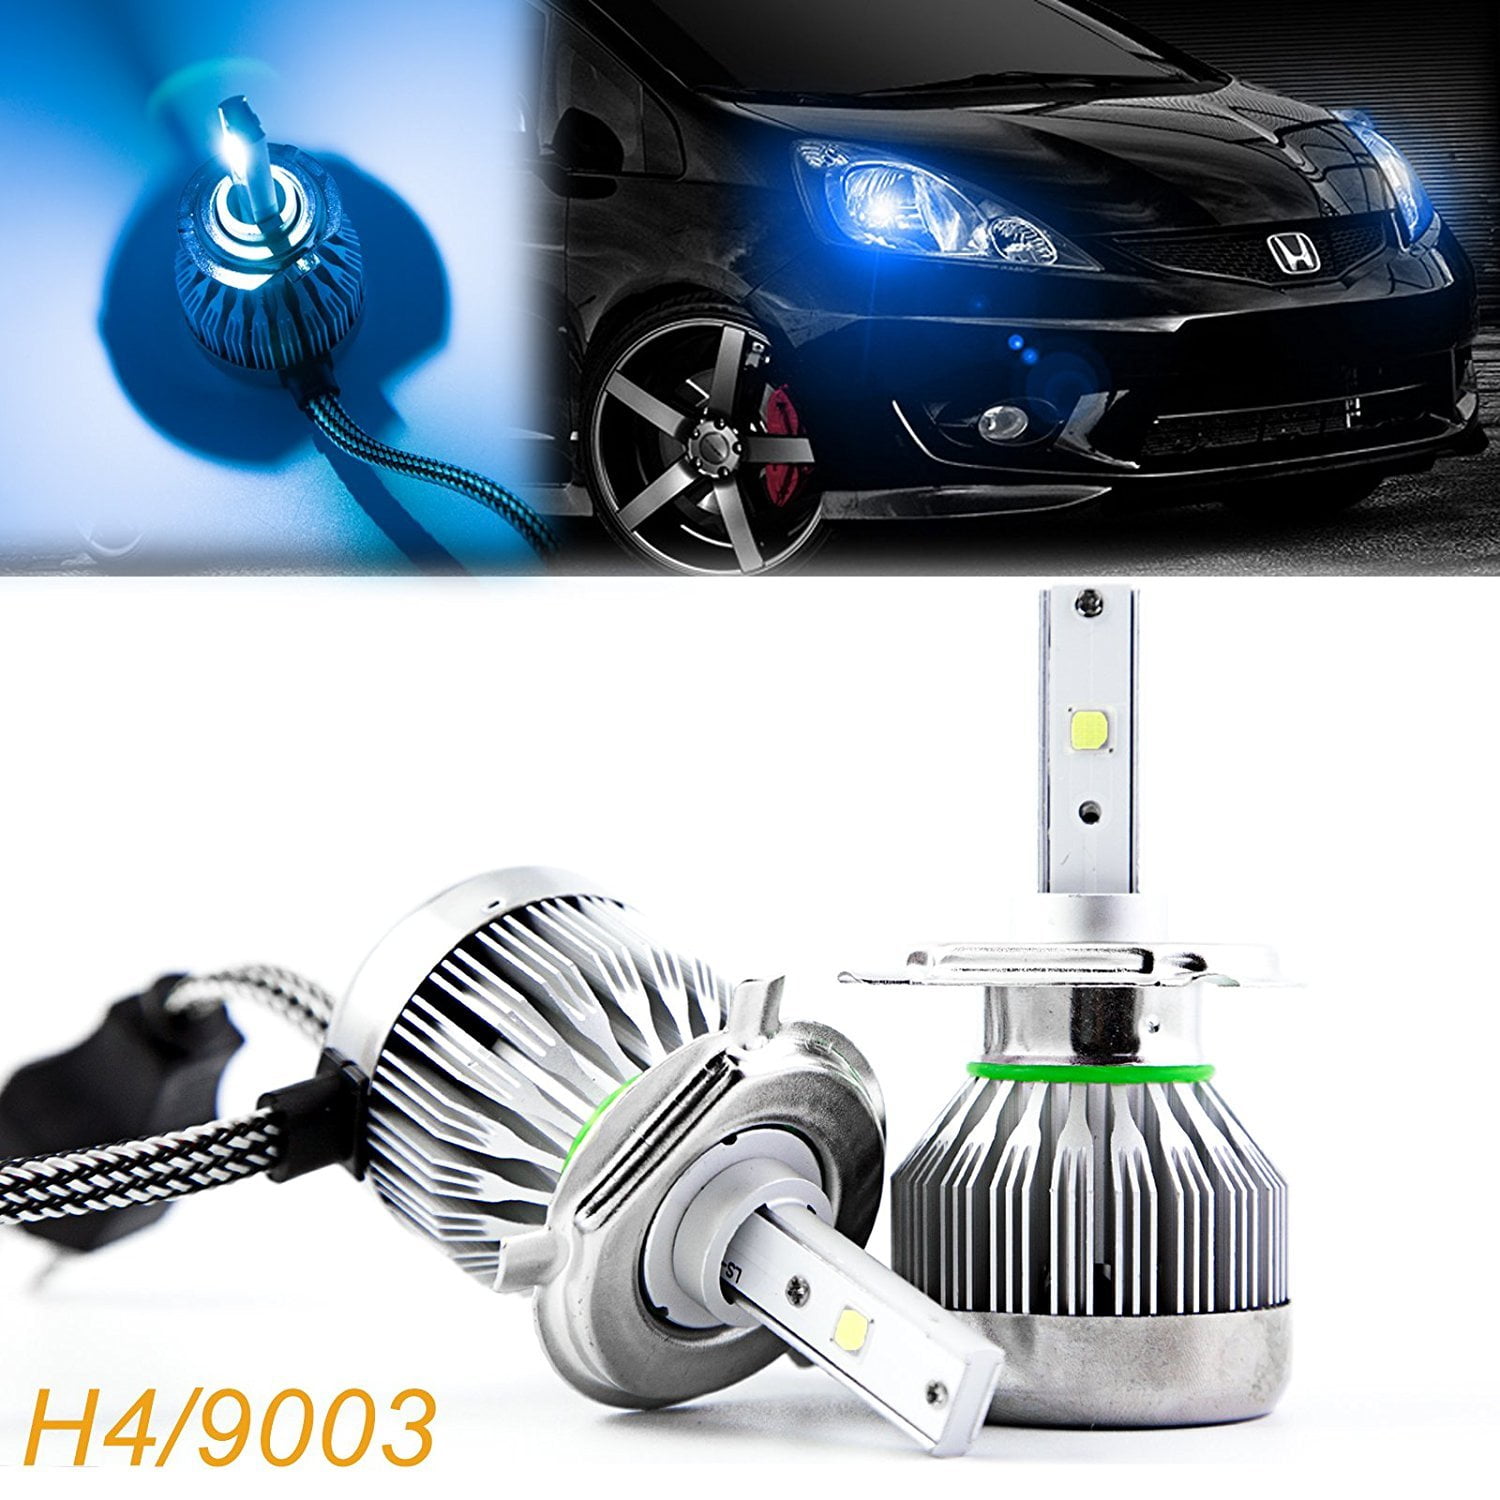 Details about   200W H4 9003 HB2 Hi/Lo LED Headlight Lamp Light Bulbs Conversion Kit 6500K White